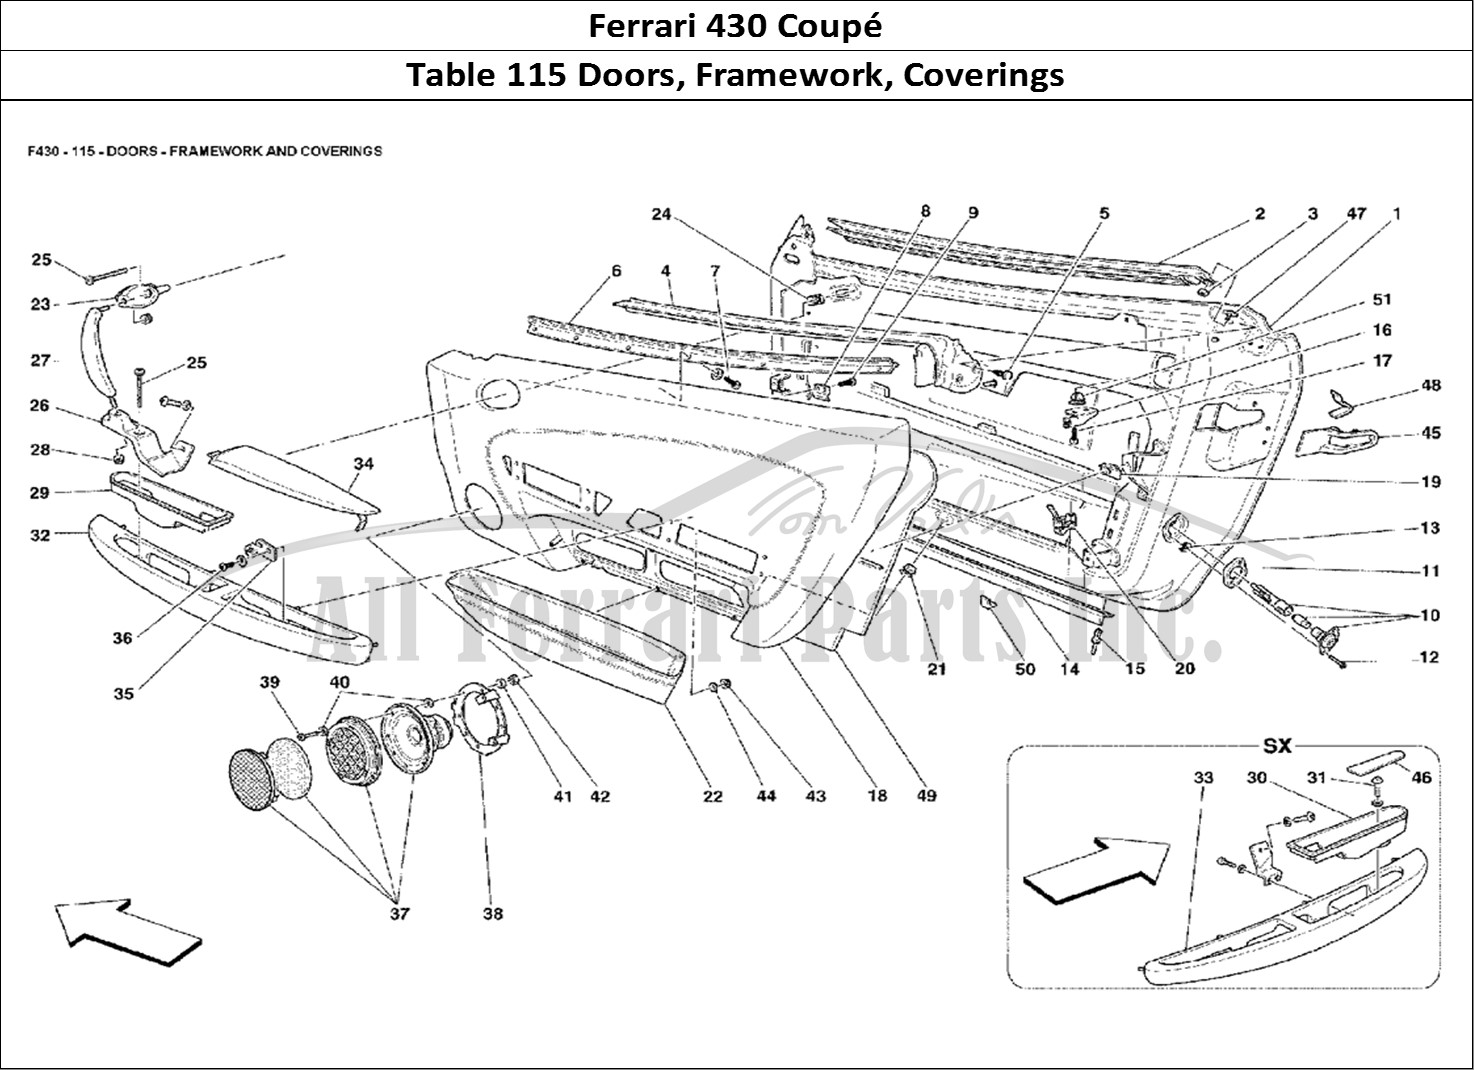 Ferrari Parts Ferrari 430 Coup Page 115 Doors - Framework and Cov